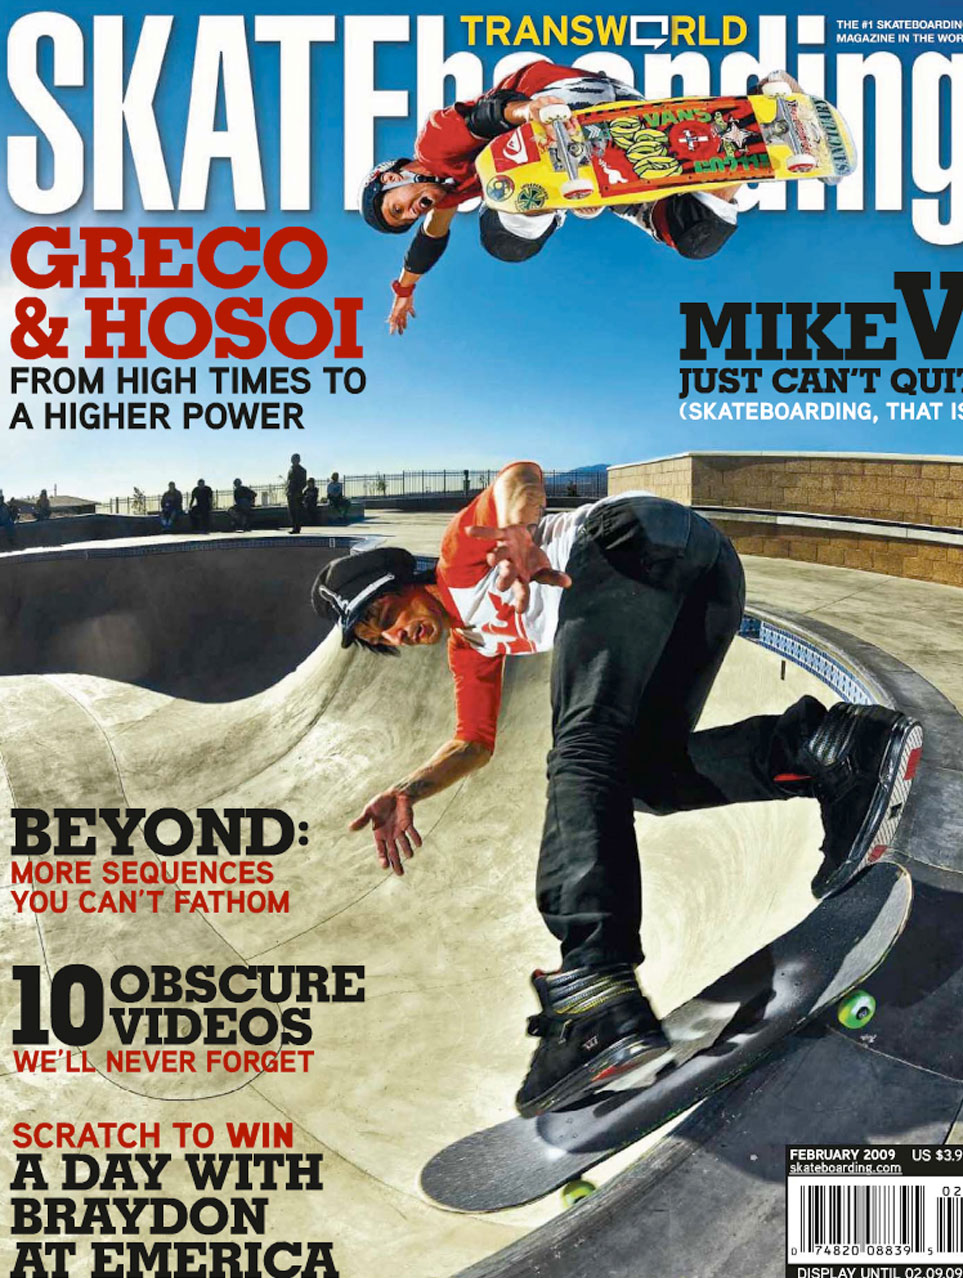 Couverture du magazine de skateboard TRANSWORLD 2009 avec Christian HOSOI